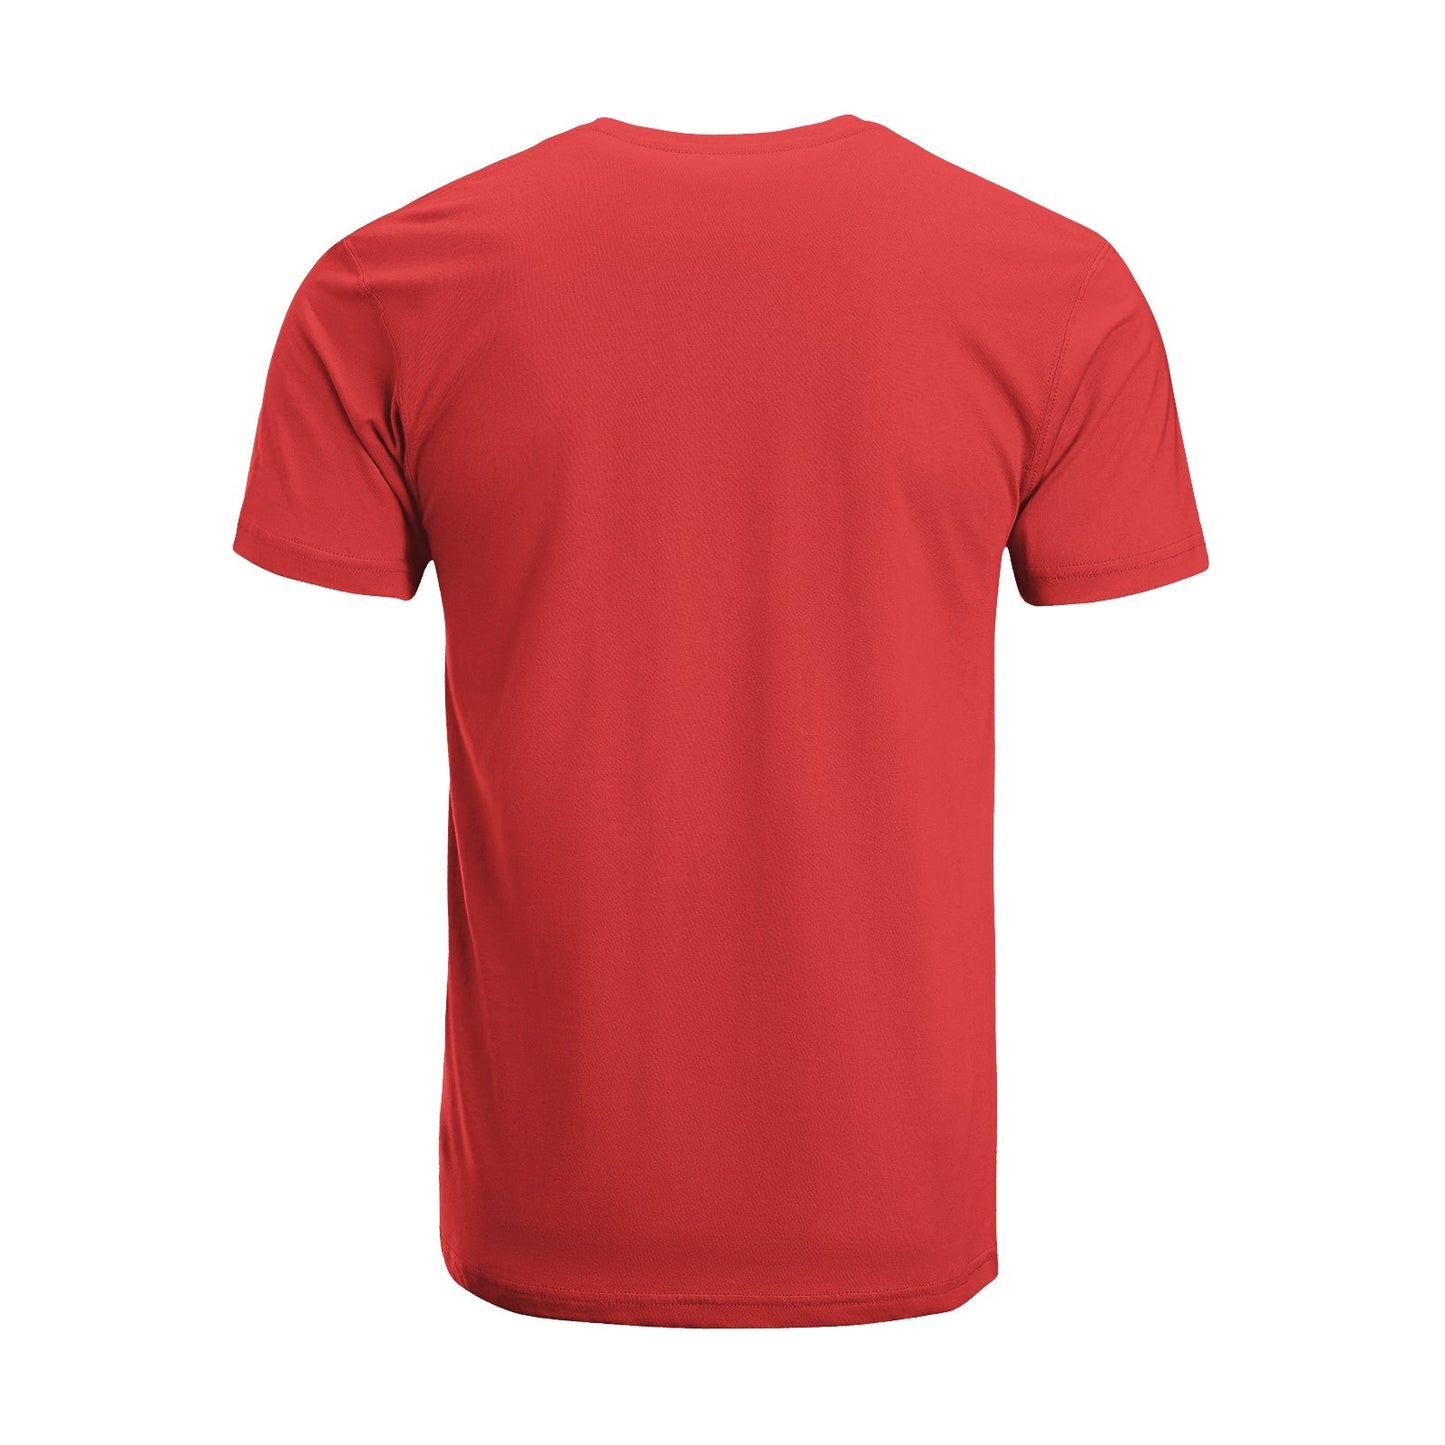 Unisex Short Sleeve Crew Neck Cotton Jersey T-Shirt USA 20